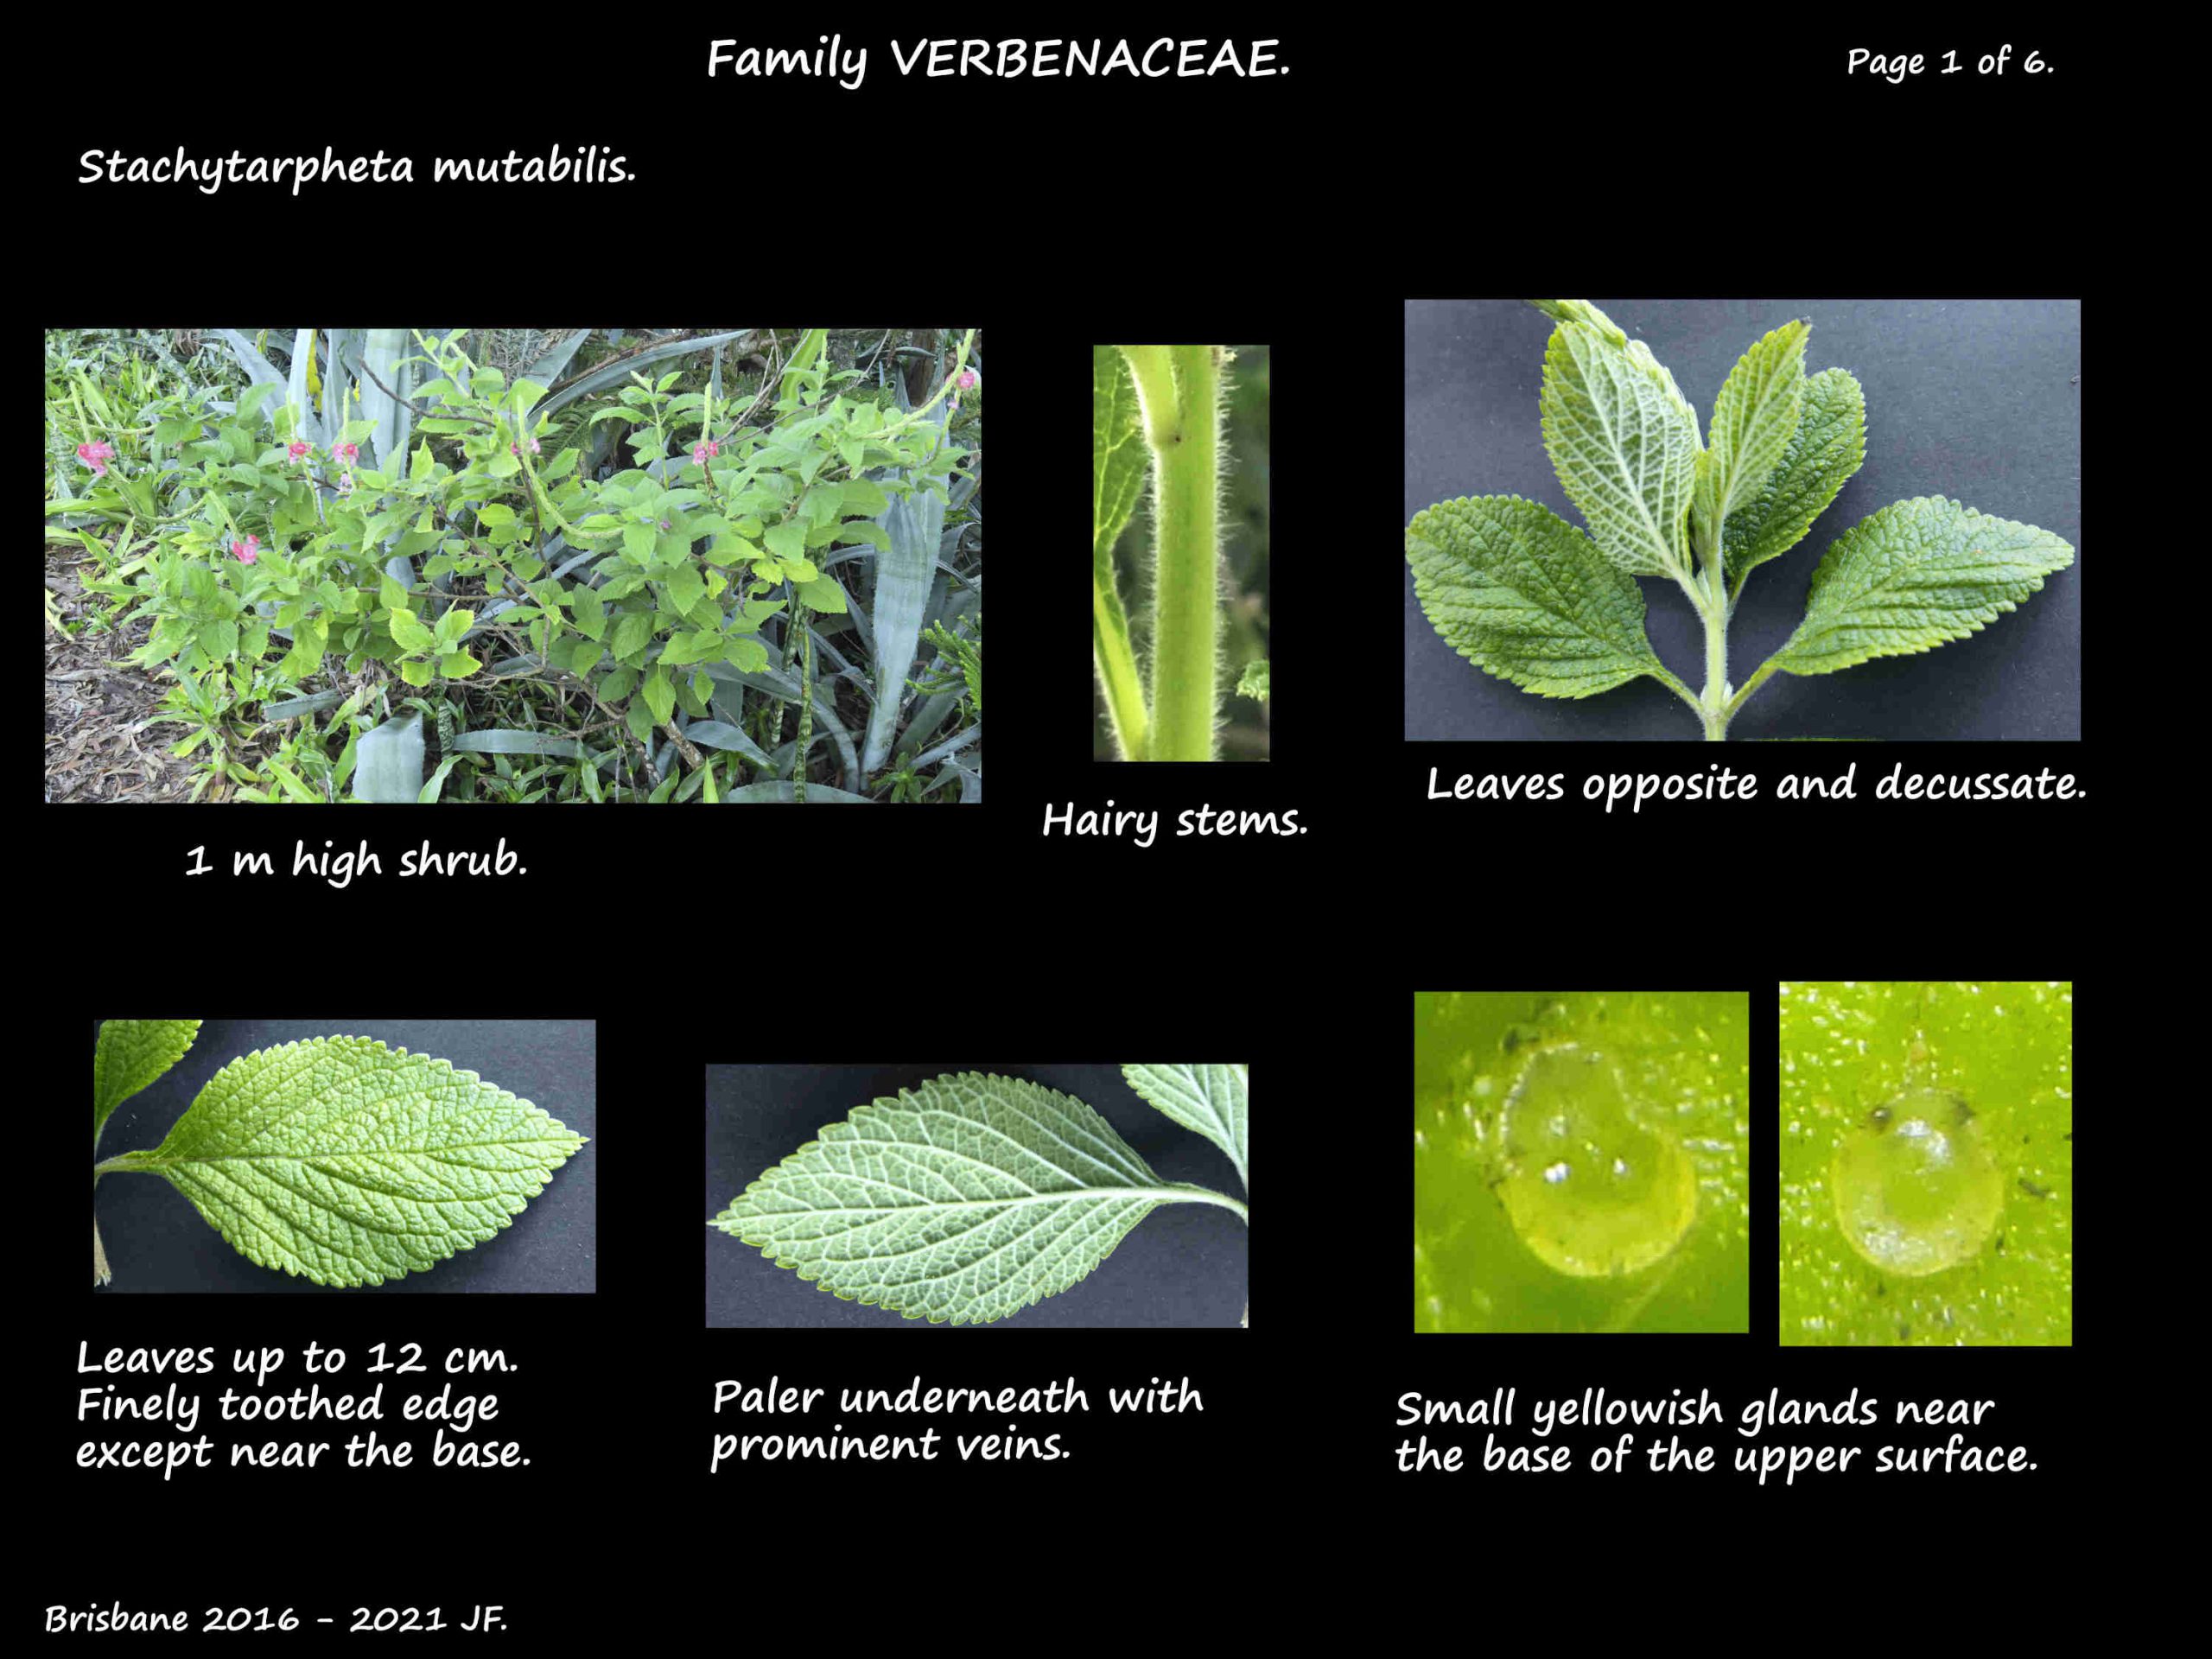 1 Stachytarpheta mutabilis leaves